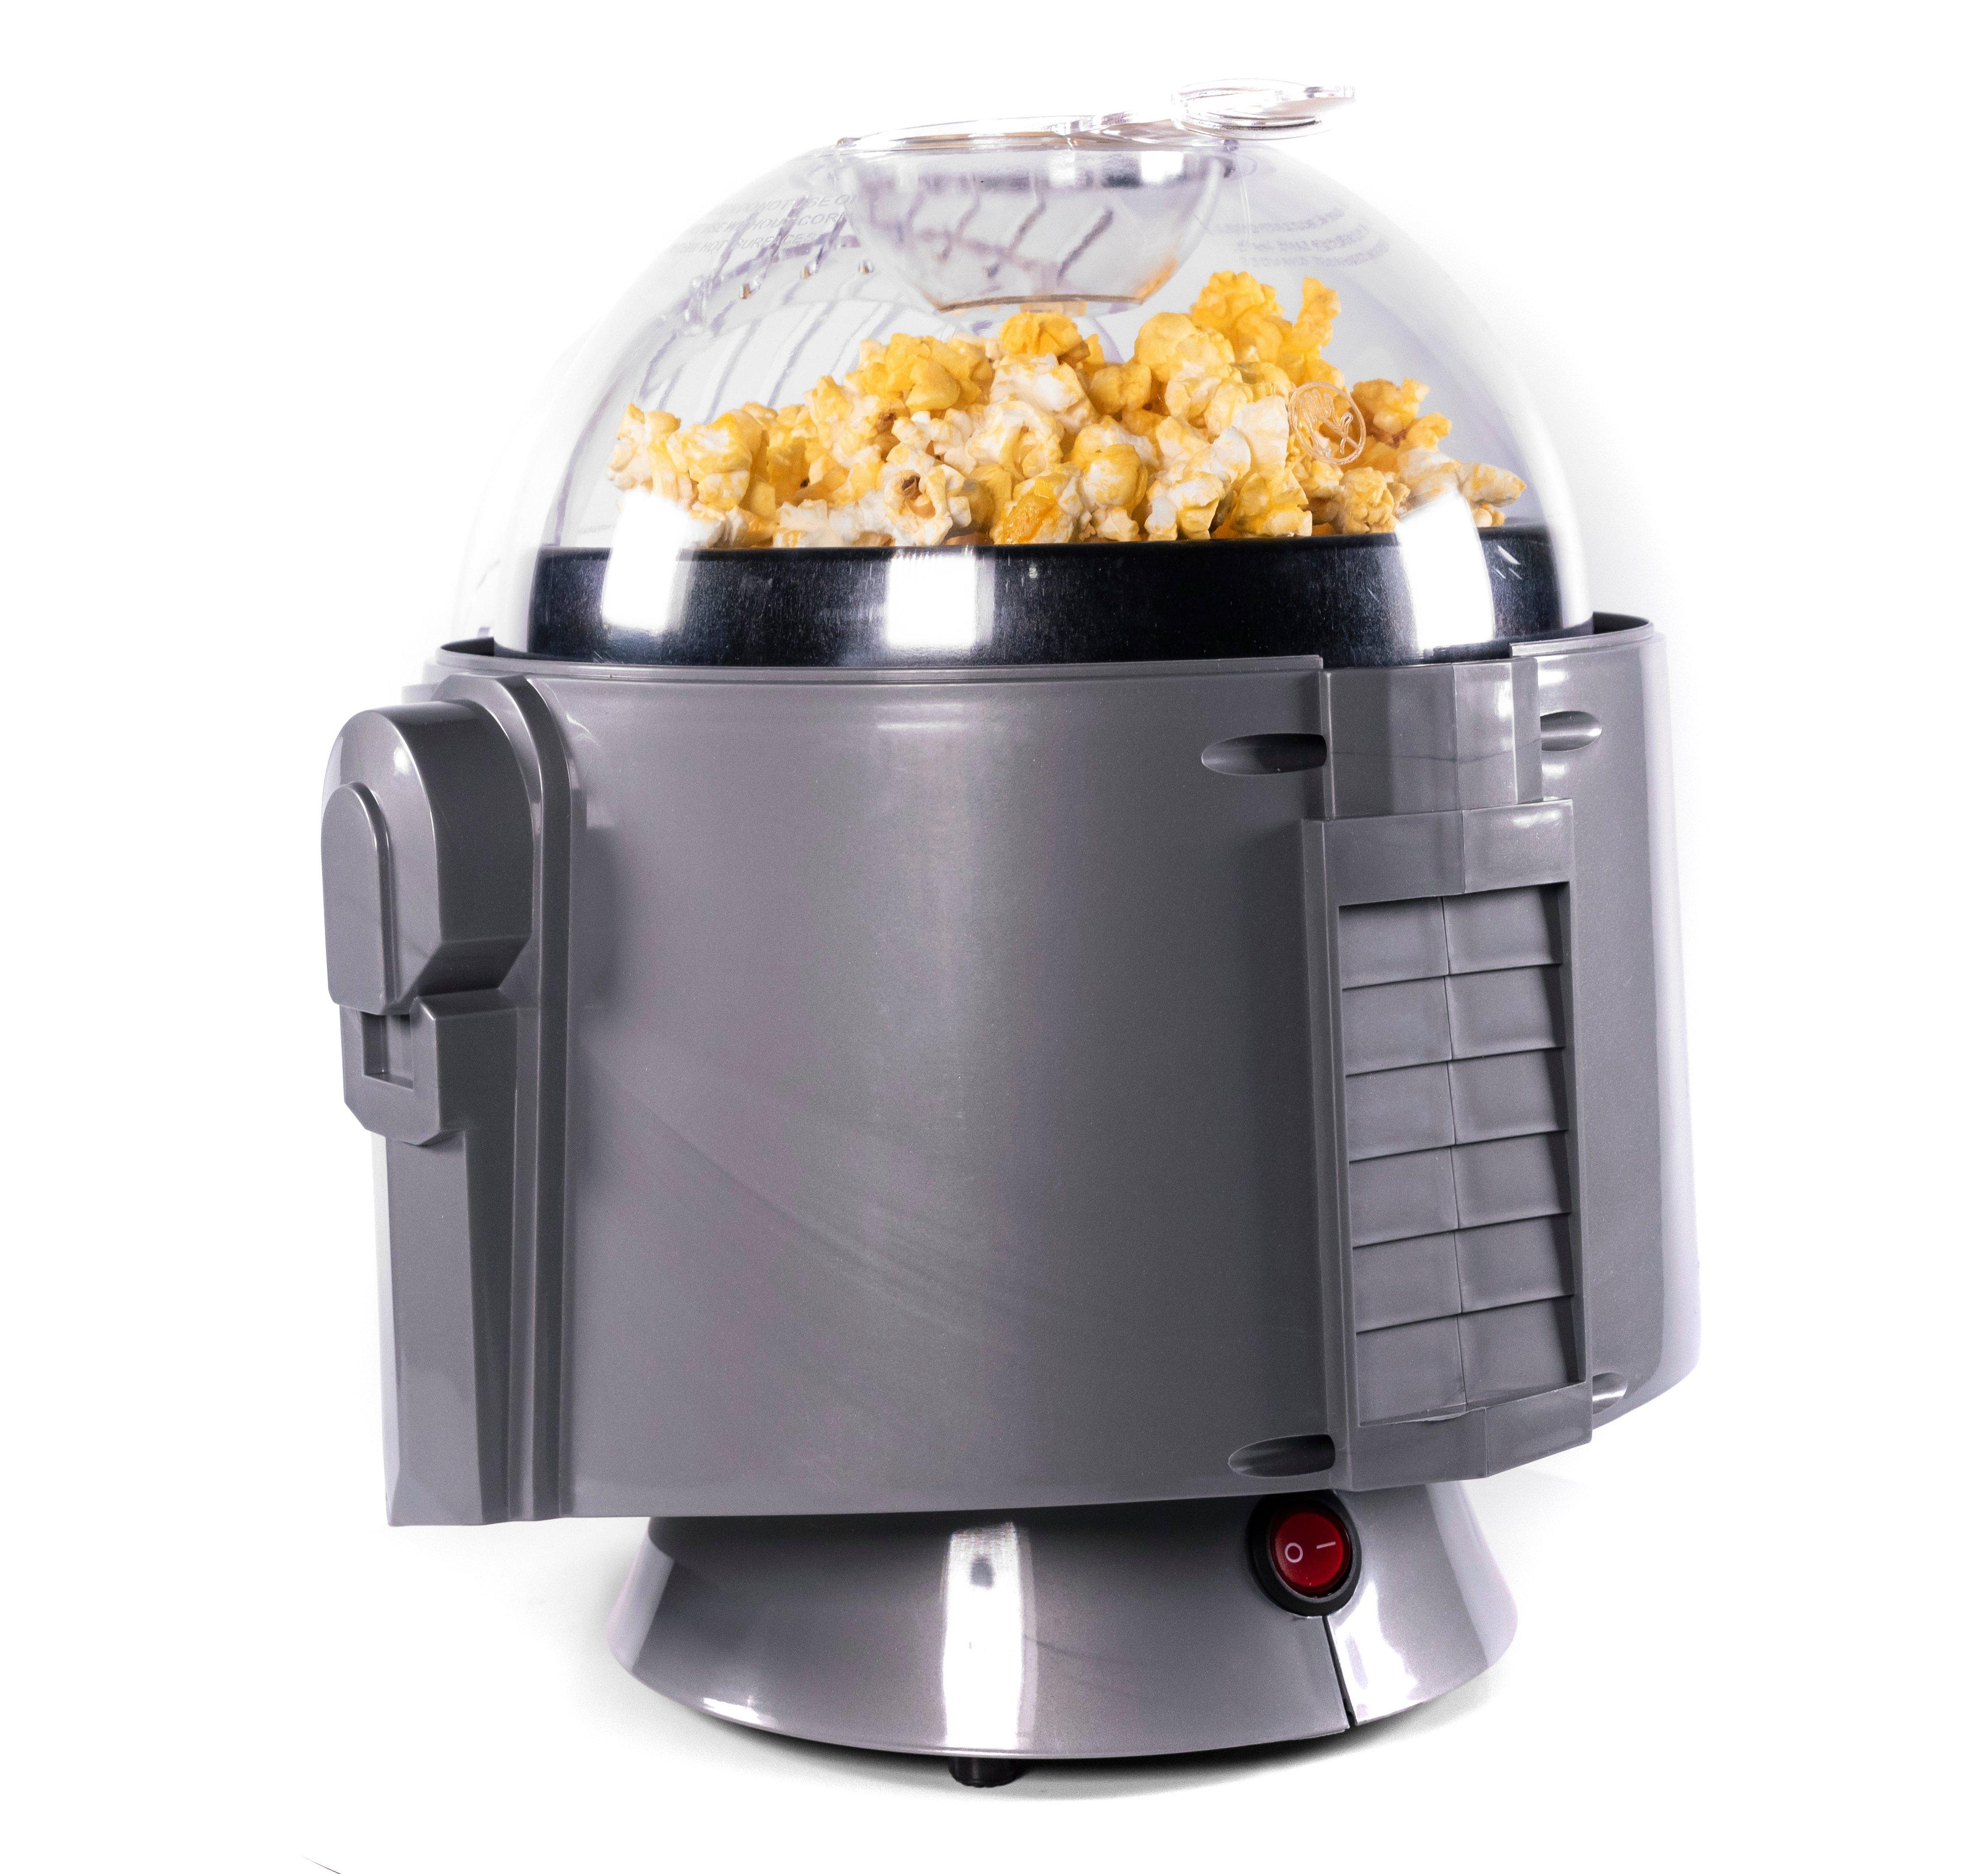 Star Wars Mandalorian Child Popcorn Maker